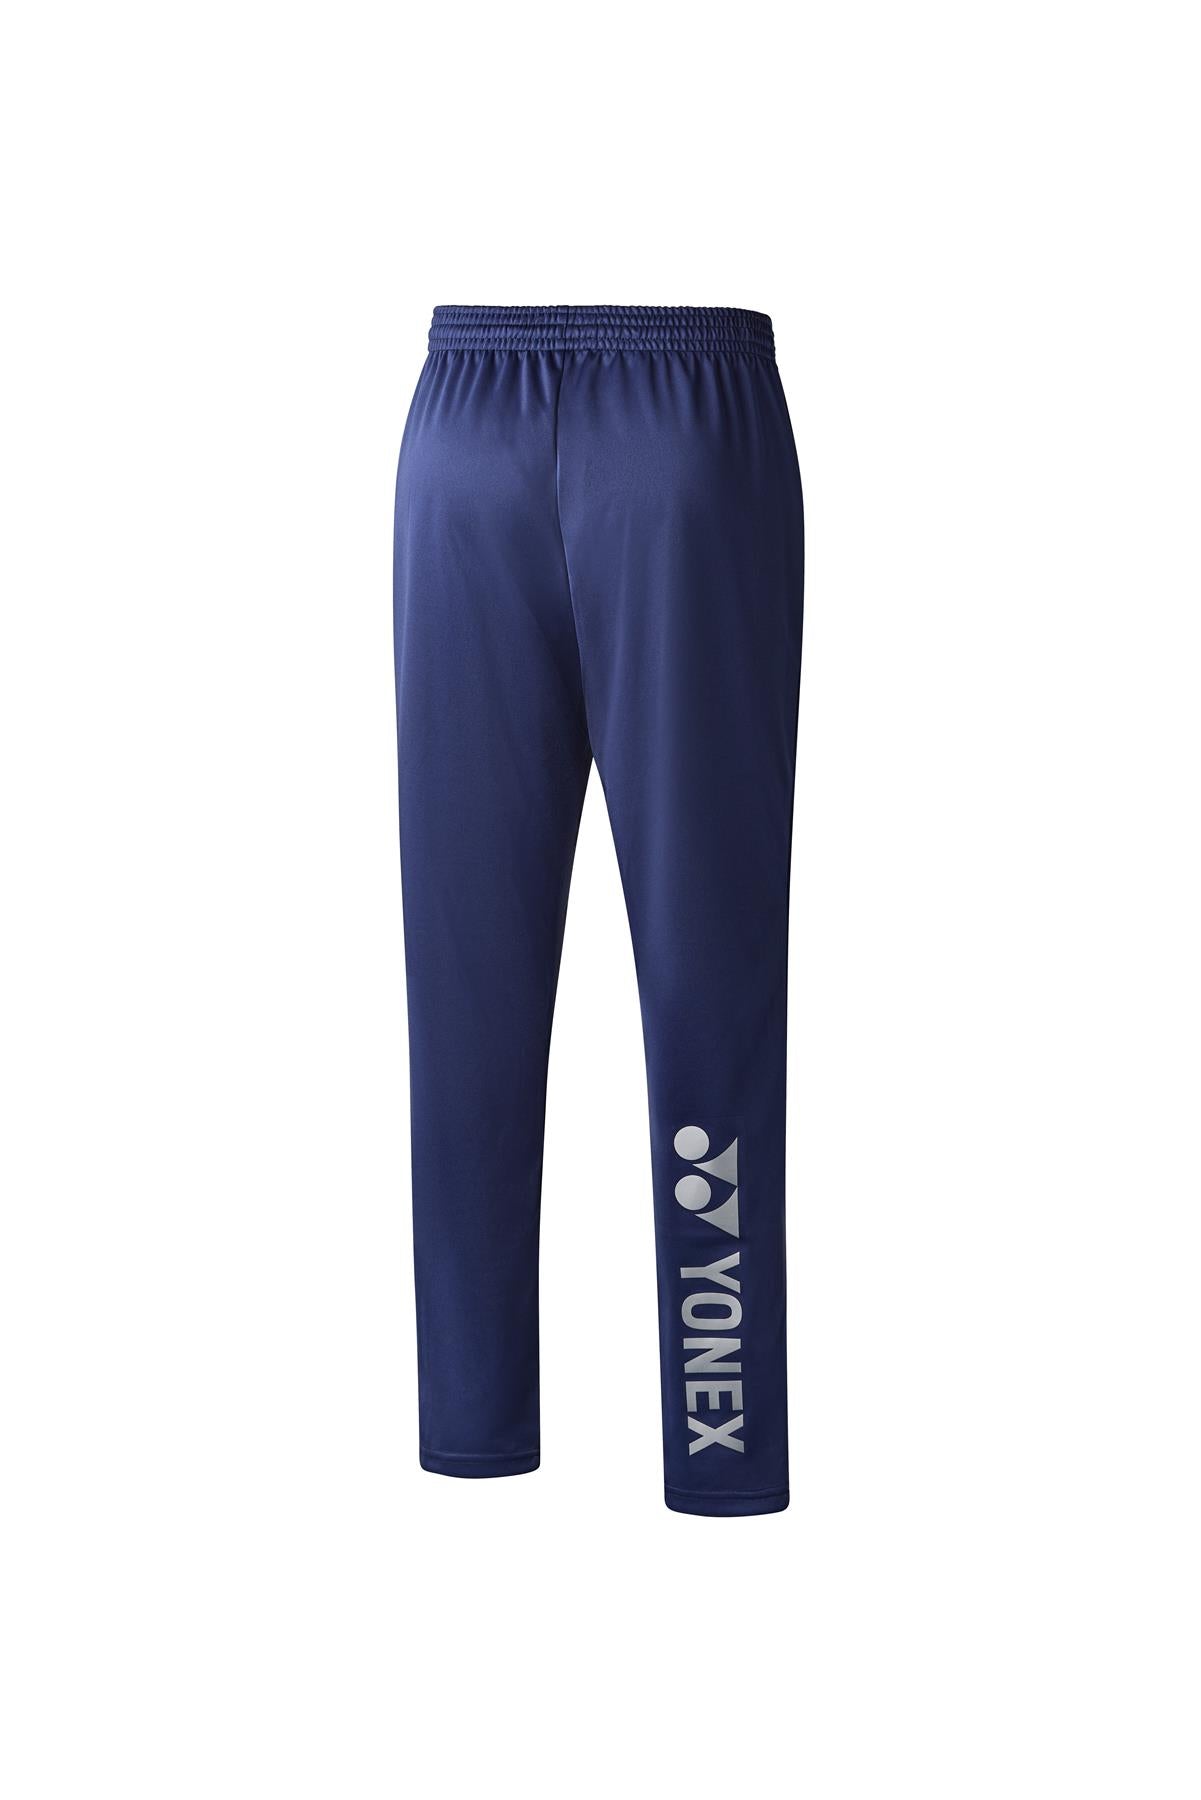 Yonex YTP123 Unisex Tennis Tracksuit Pants - Navy - Back